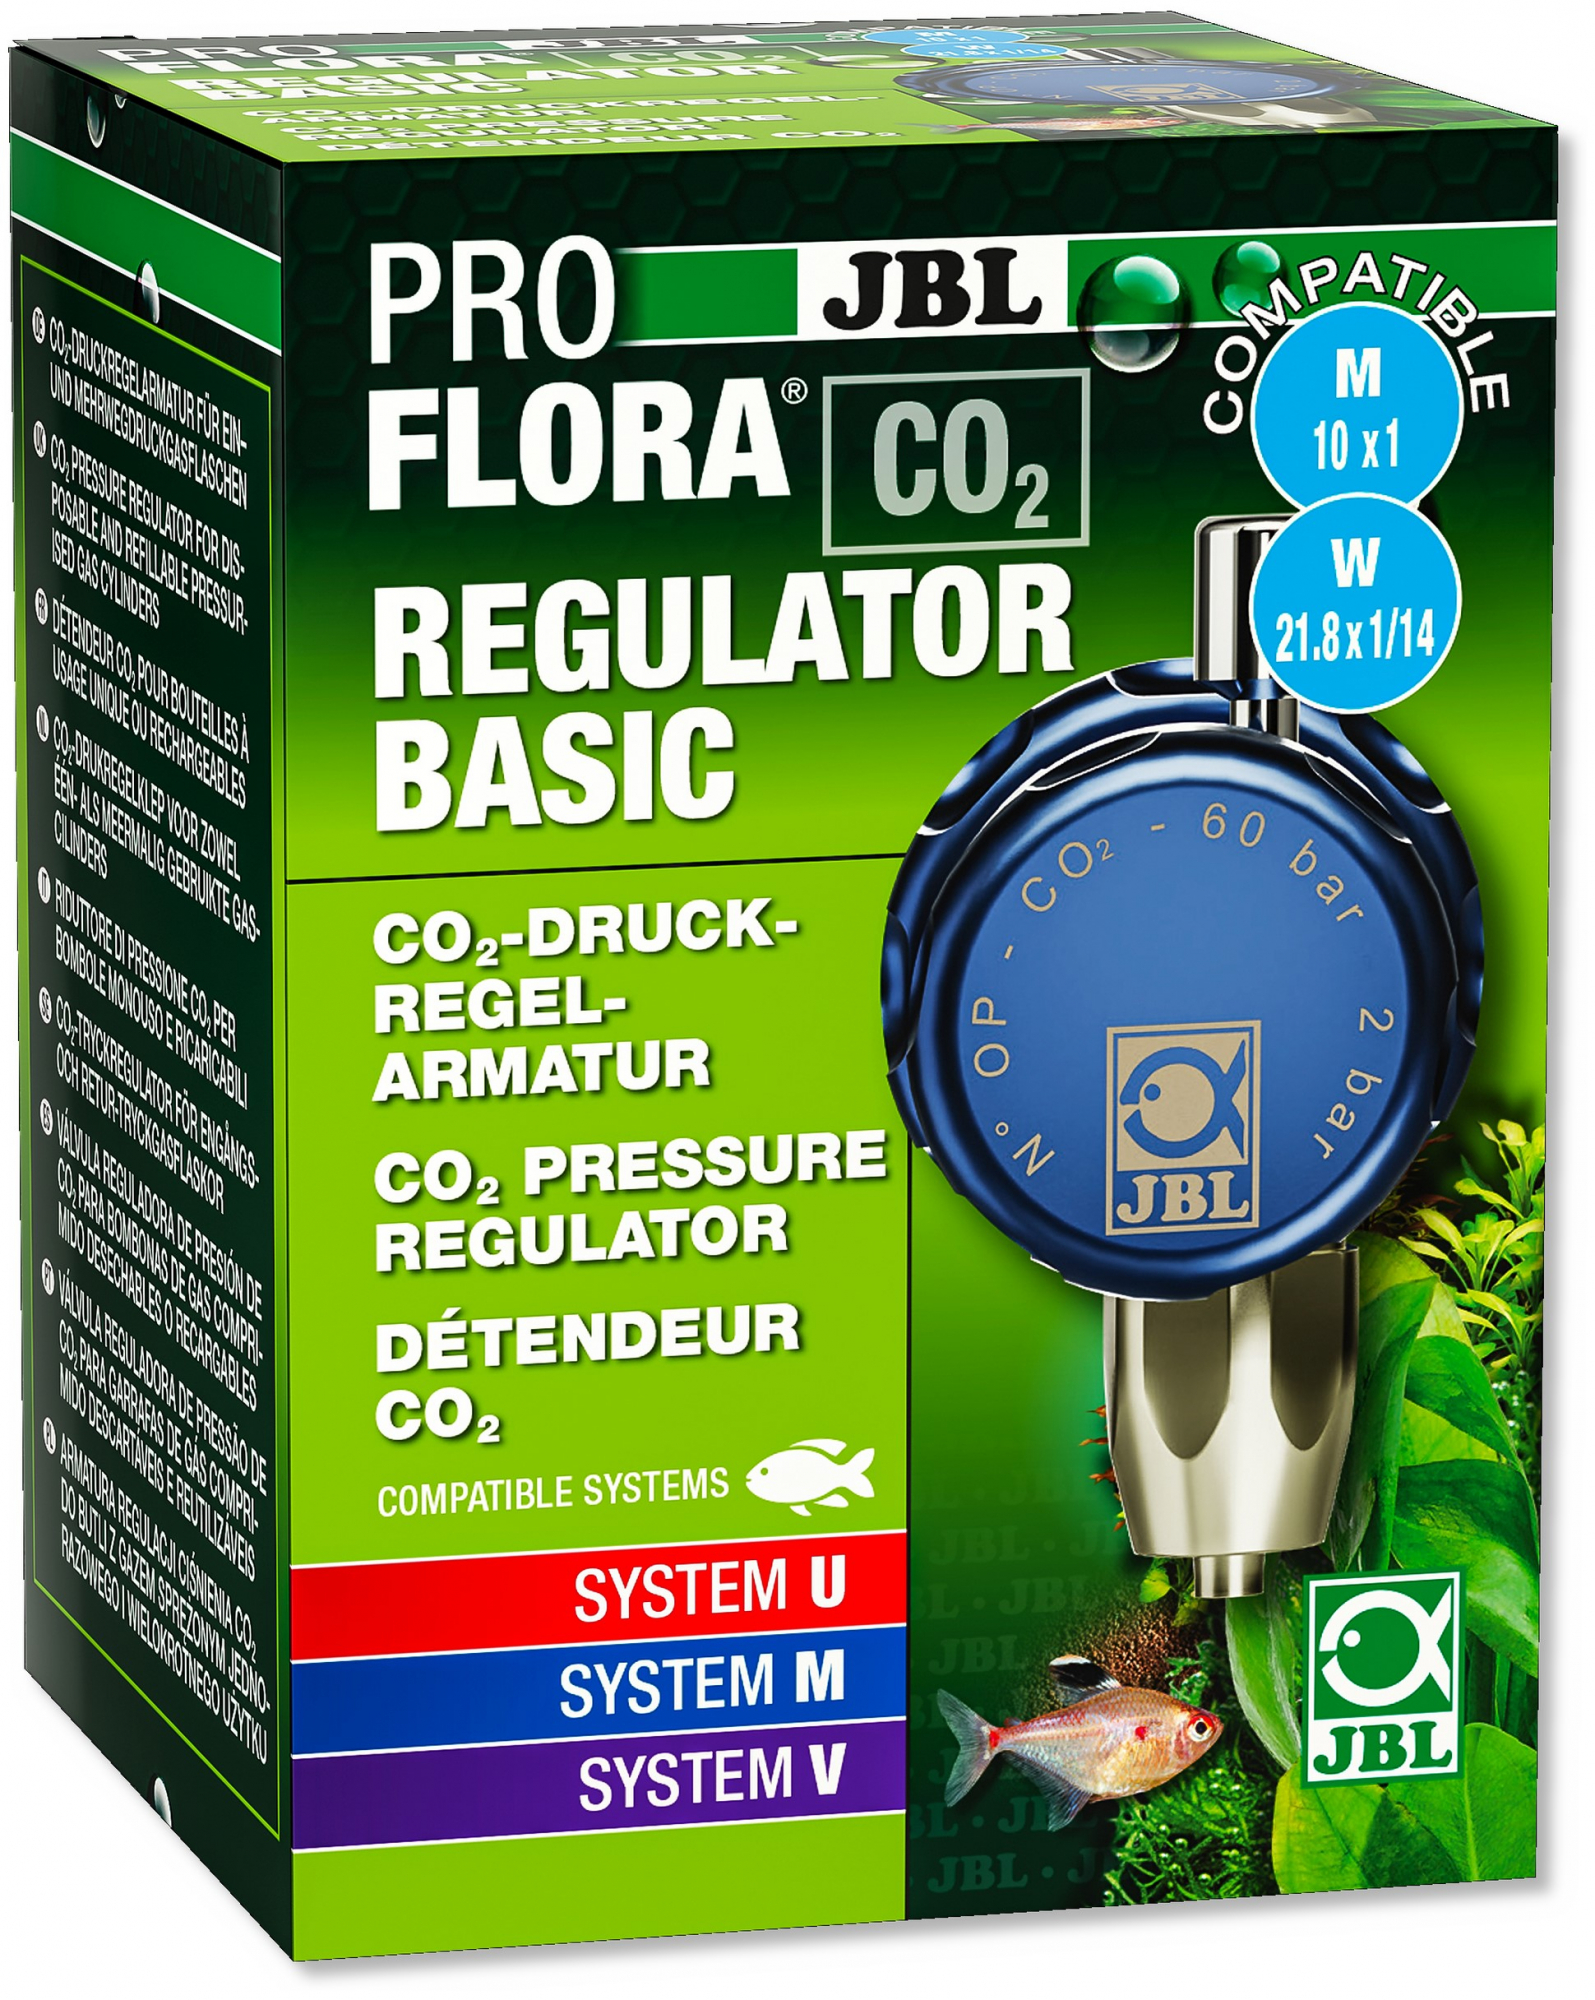 JBL Proflora Regulator Basic Regolatore per sistema fertilizzante CO2